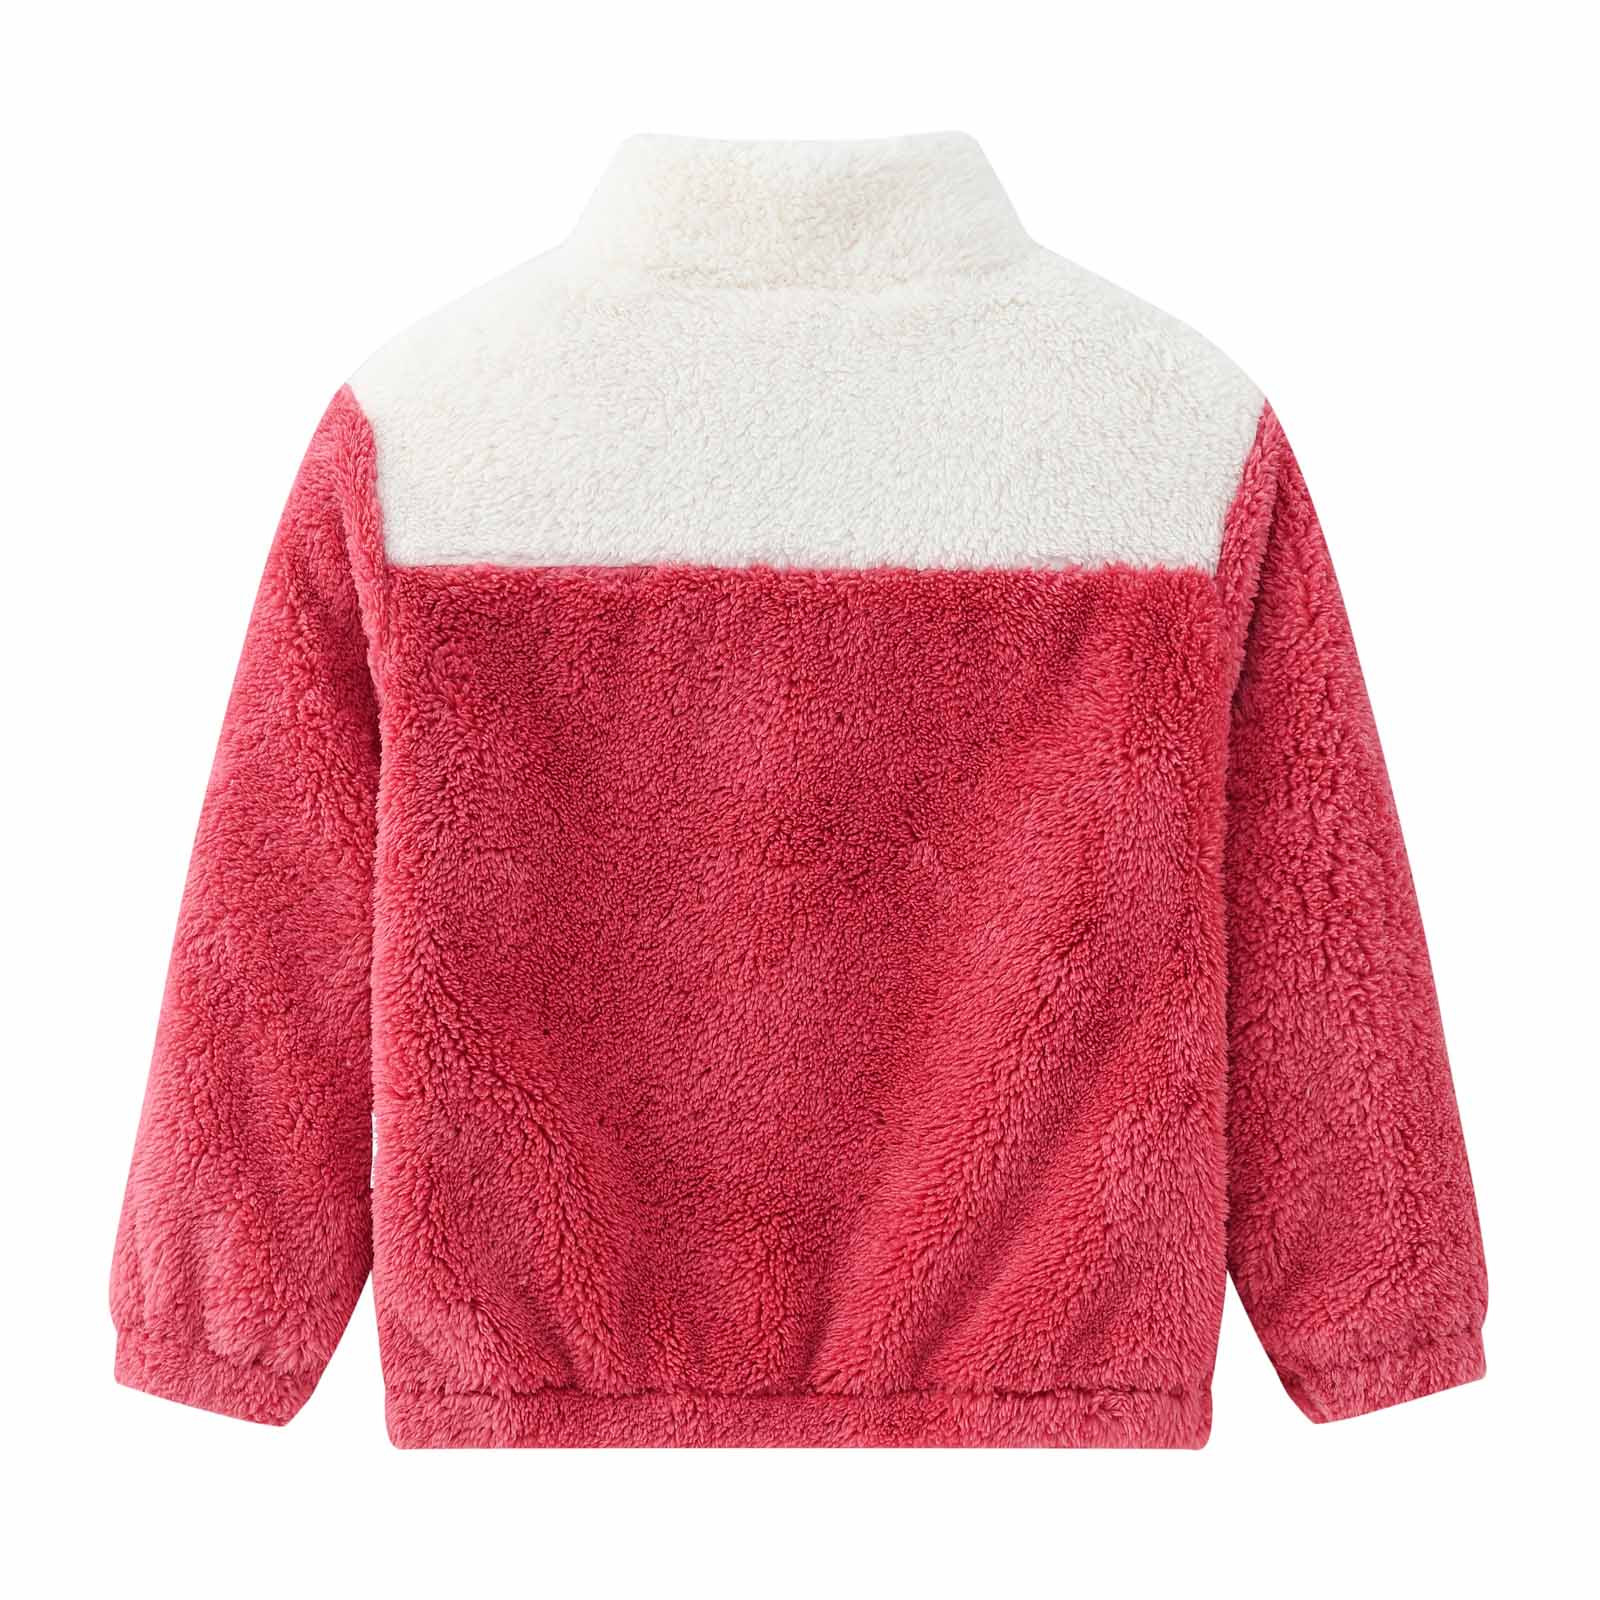 YYDGH Girls Zipper Jacket Fuzzy Sweatshirt Long Sleeve Casual Cozy Fleece Sherpa Outwear Coat Full-Zip Rainbow Jackets(Red,4-5 Years) - image 4 of 8